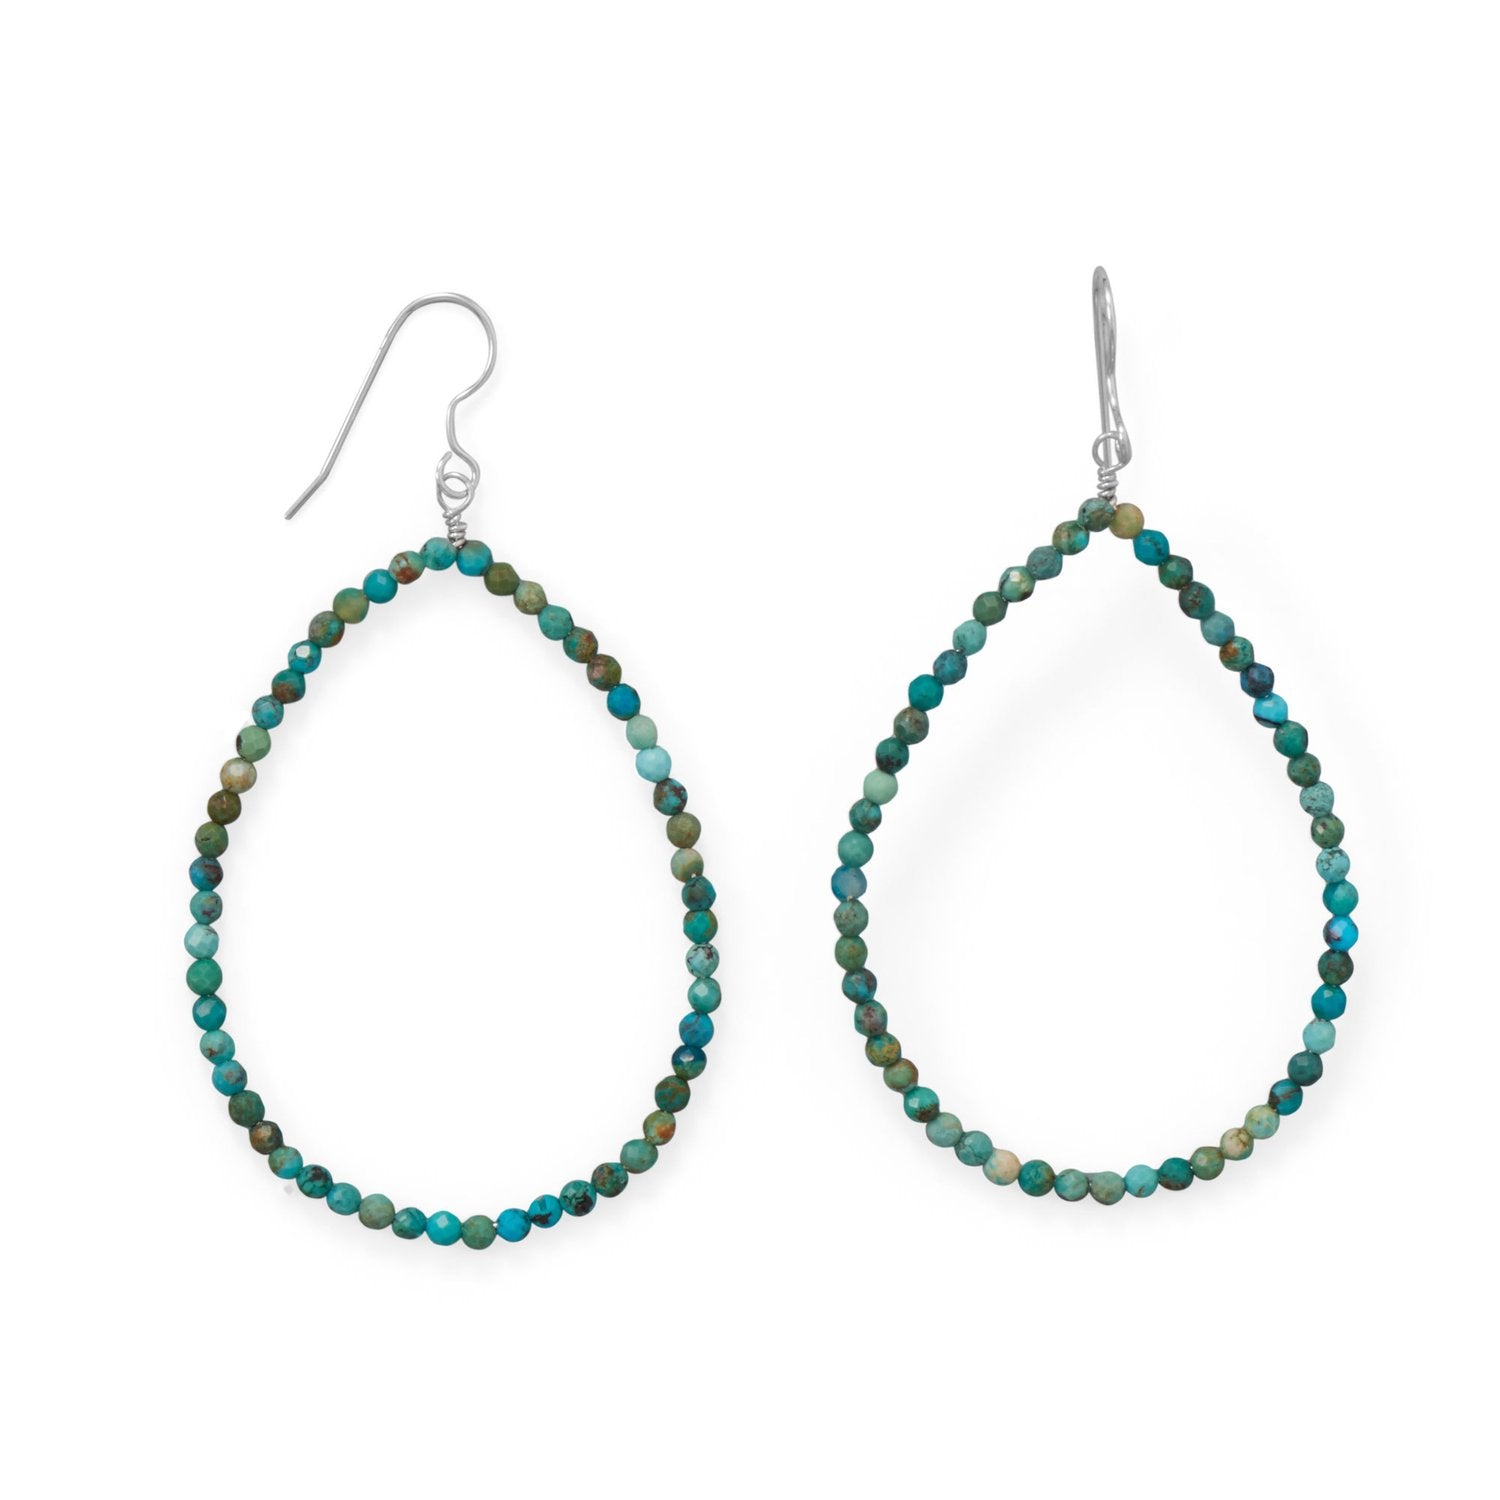 Ooh La La! Natural Turquoise Statement Earrings - Joyeria Lady